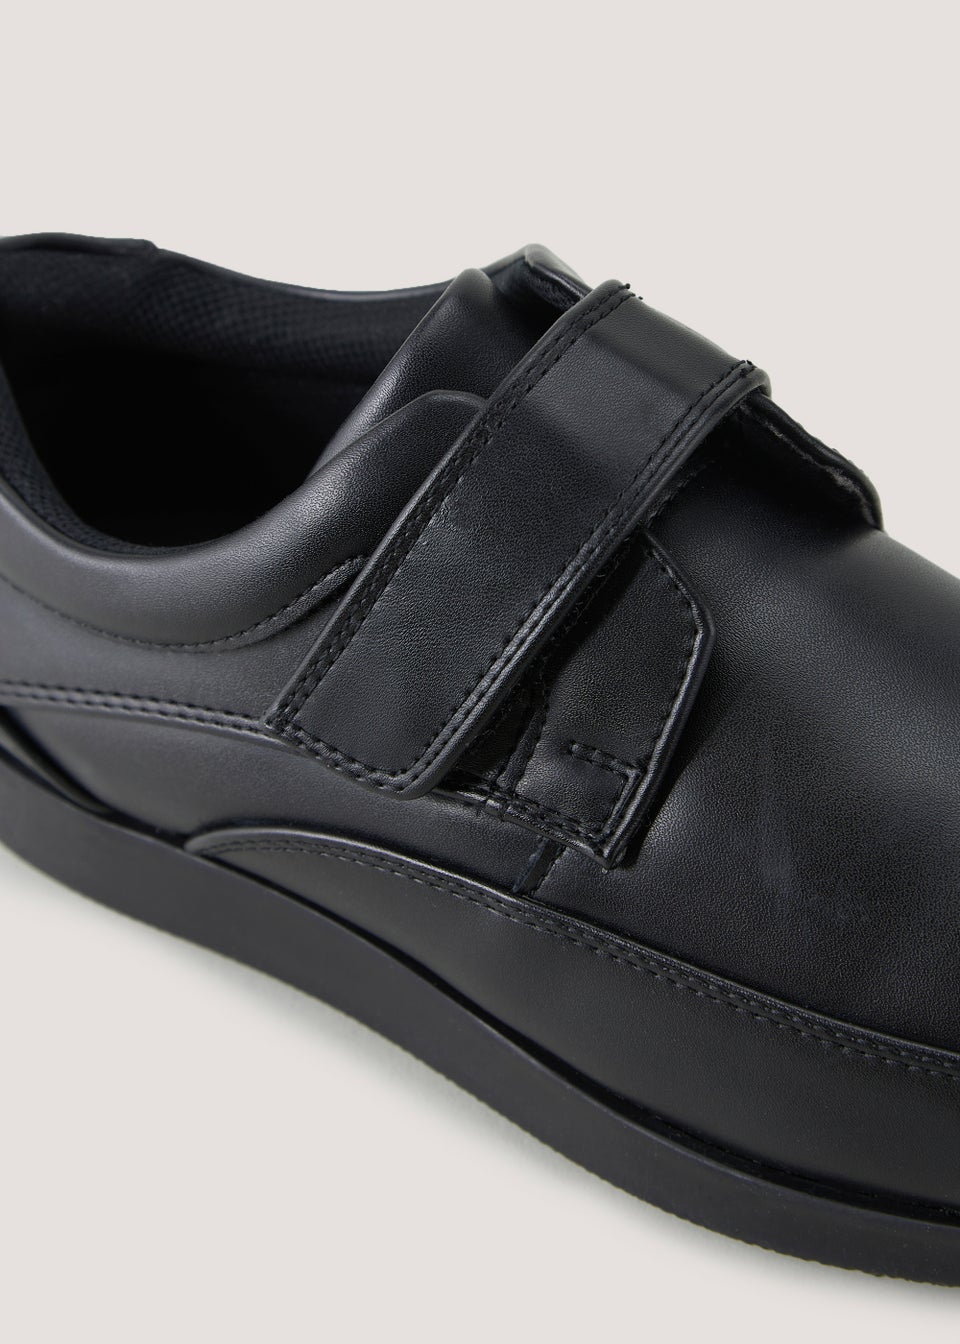 Soleflex Black Riptape Formal Shoes